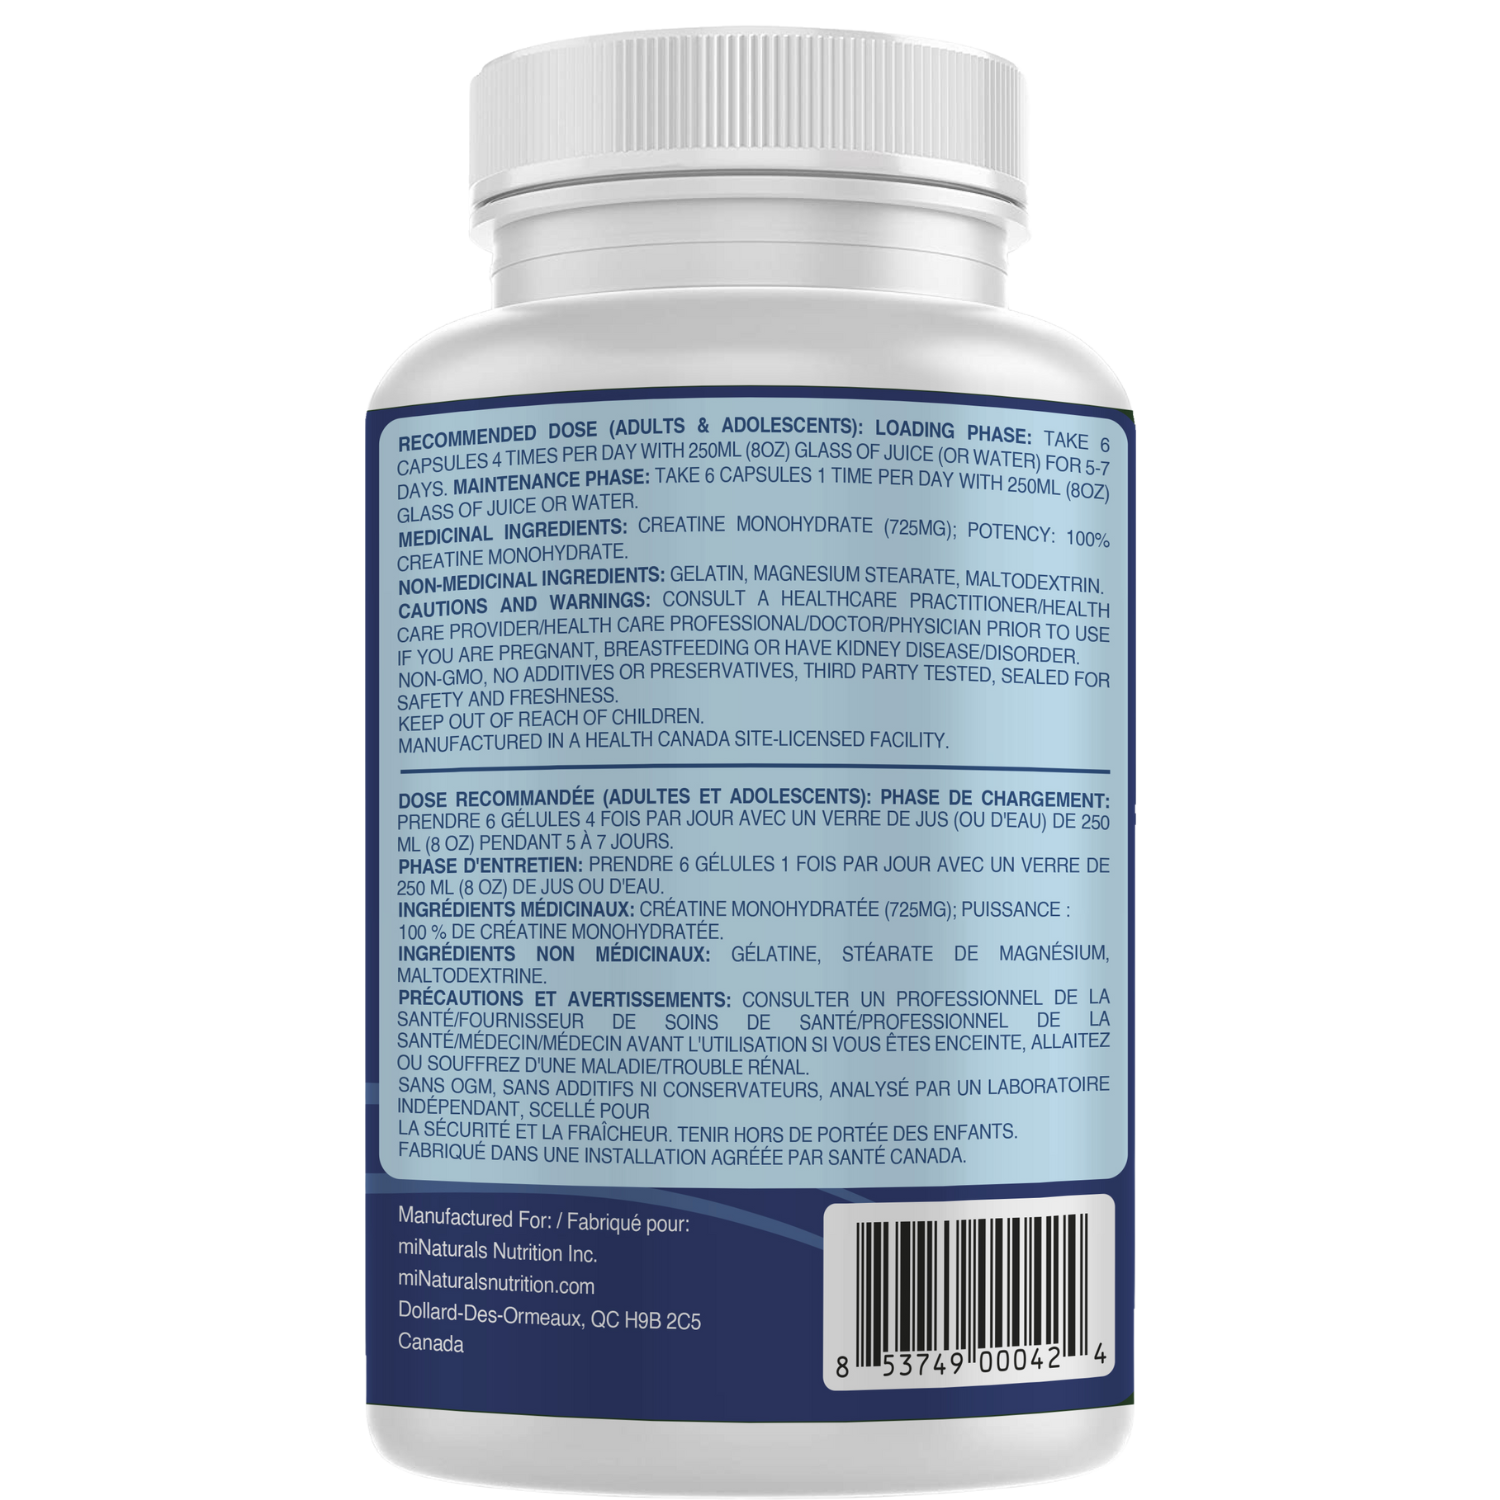 Micronized Creatine Monohydrate Capsules - 300 Capsules